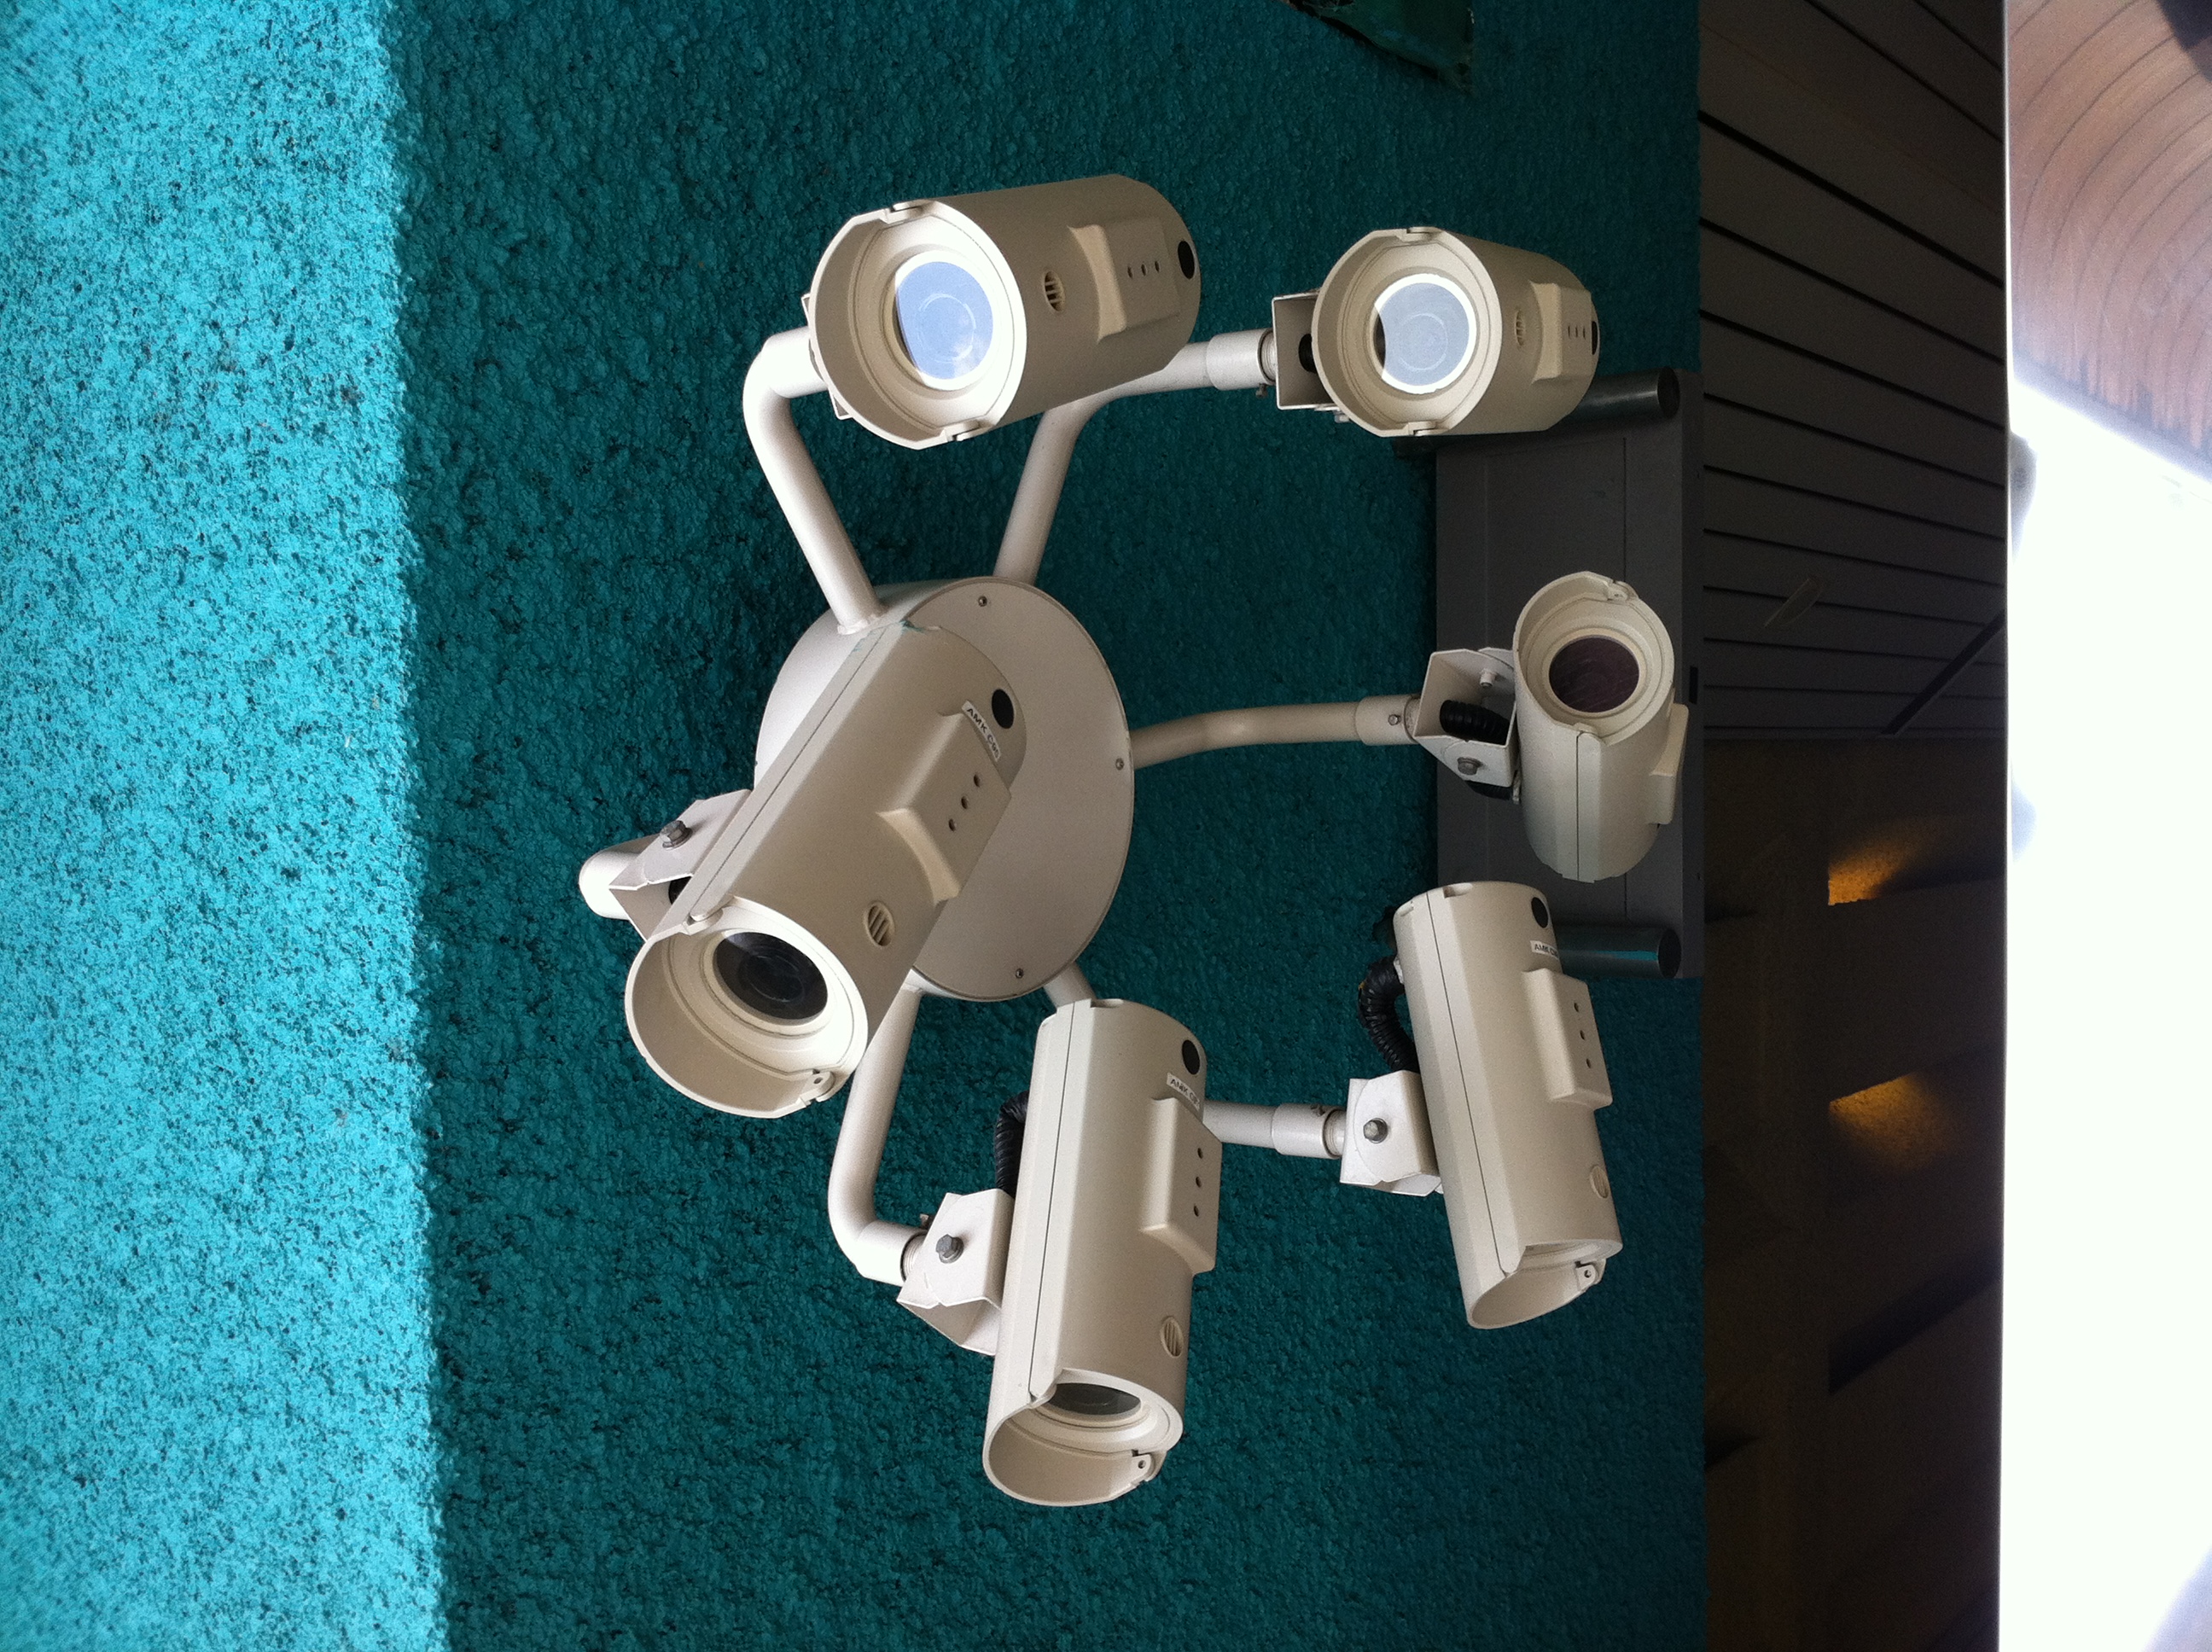 CCTV in Singaporean Mass Rapid Transport station